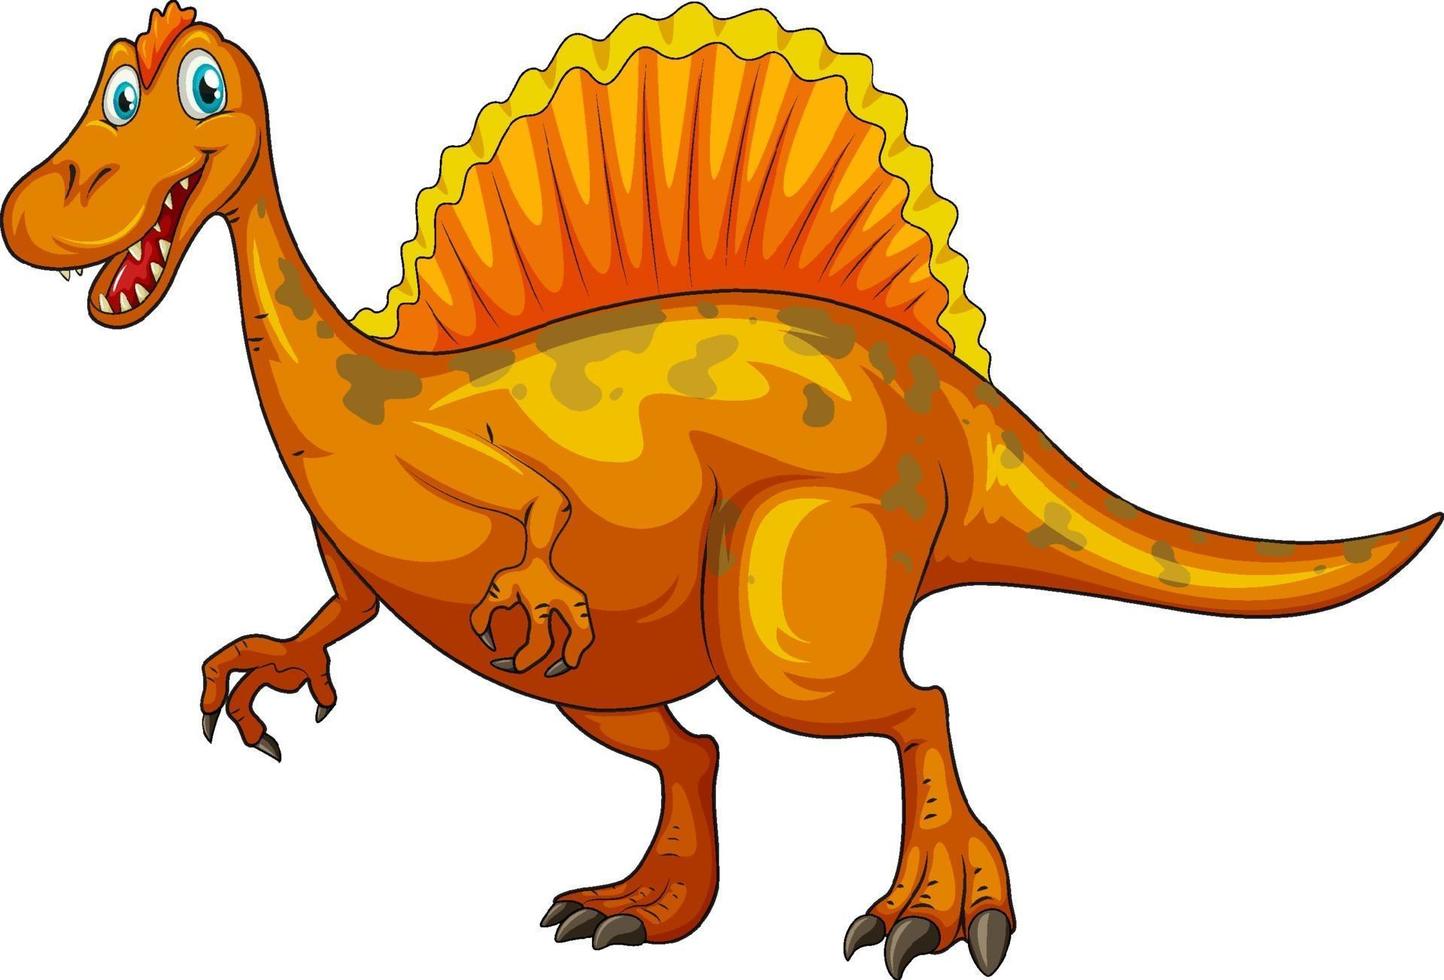 un personnage de dessin animé de dinosaure spinosaurus vecteur